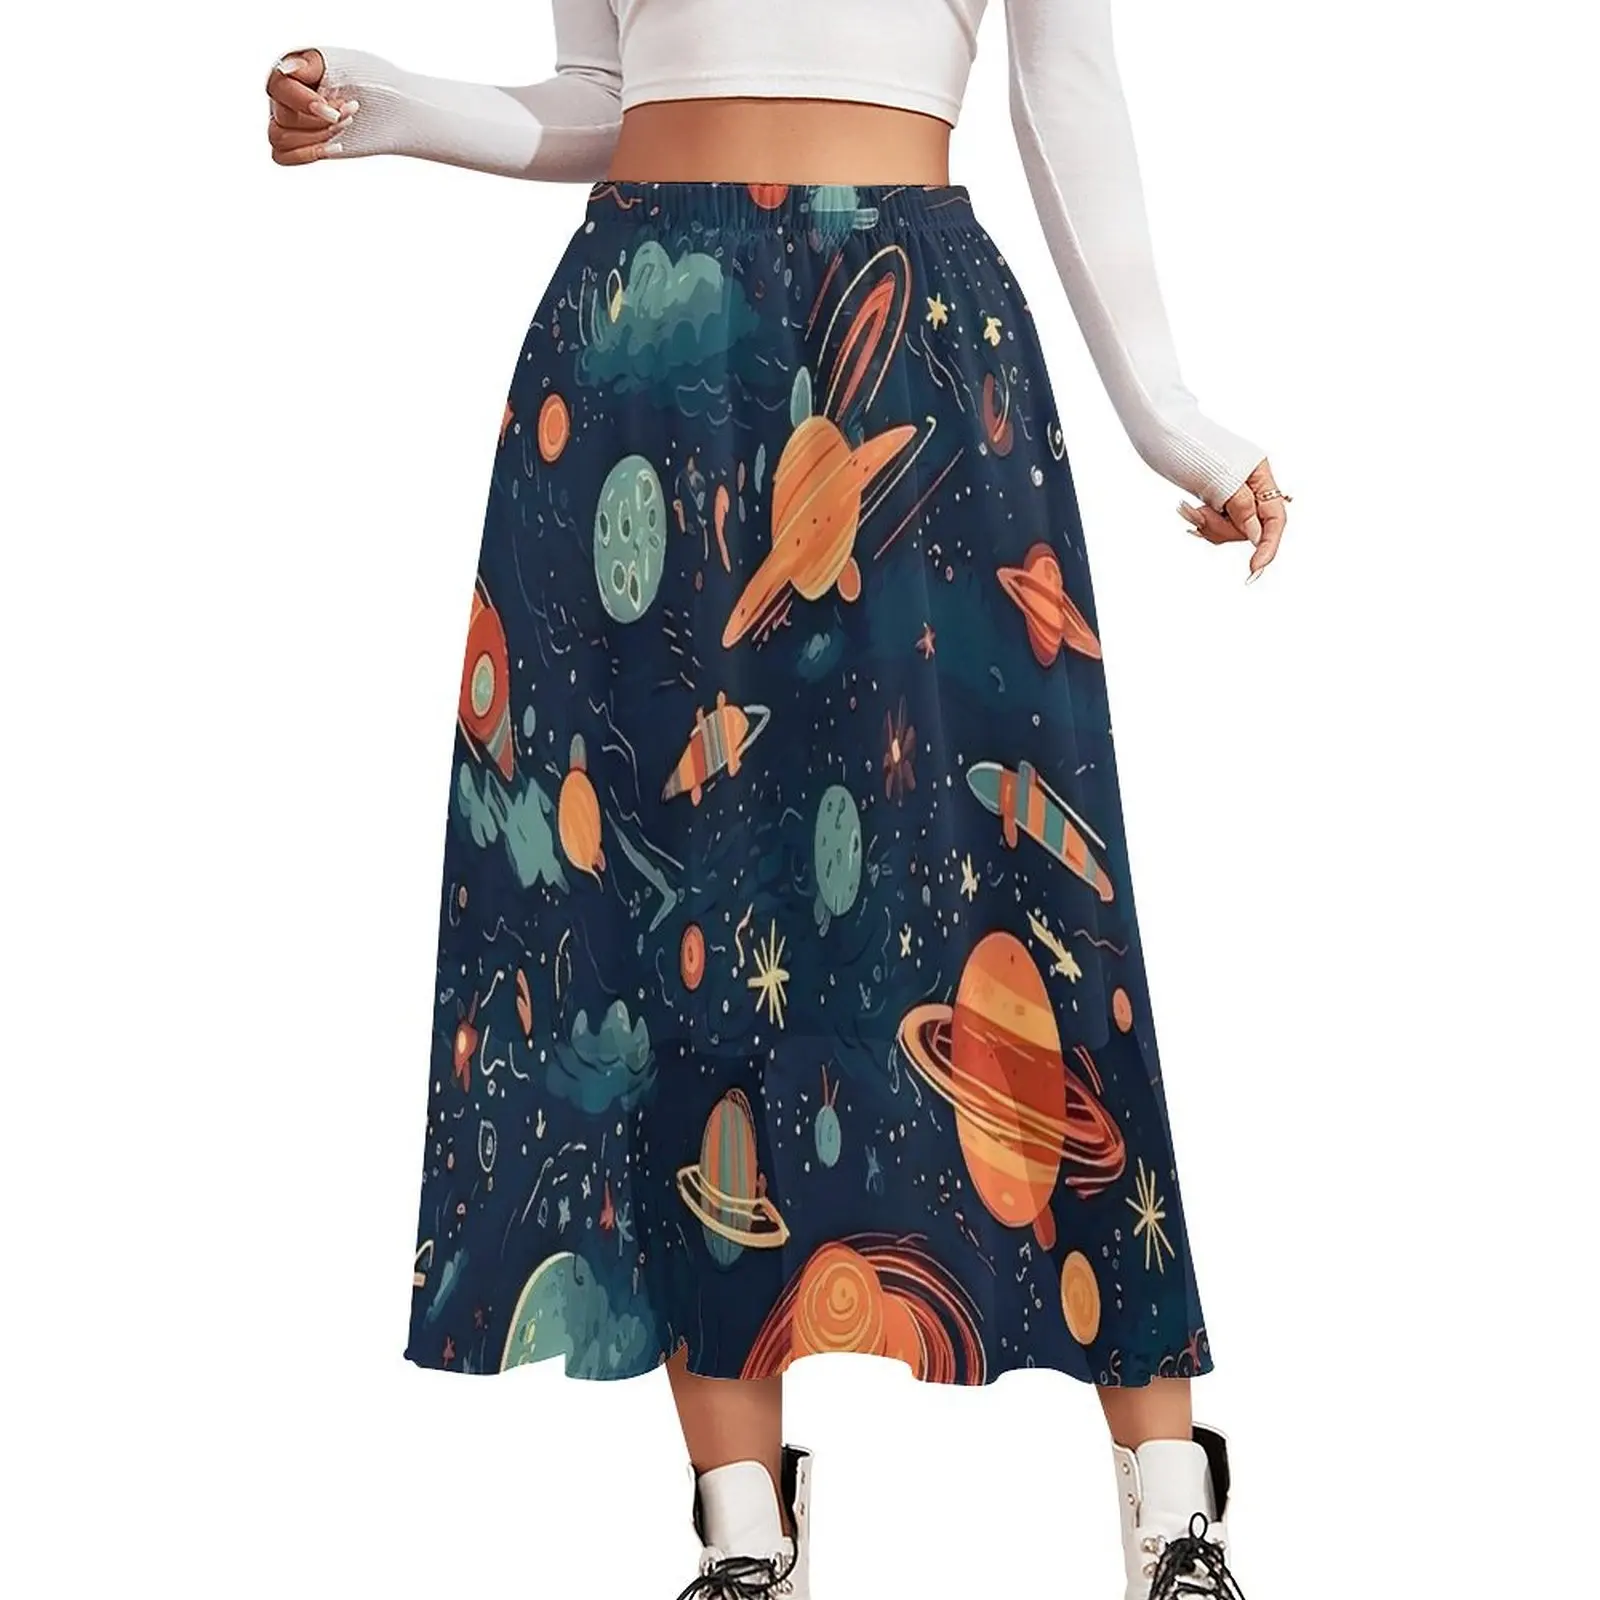 

Space Sketch Chiffon Skirt Cute Planets Stars Street Style Casual Skirts Women Beach Boho Skirt Graphic Clothing Gift